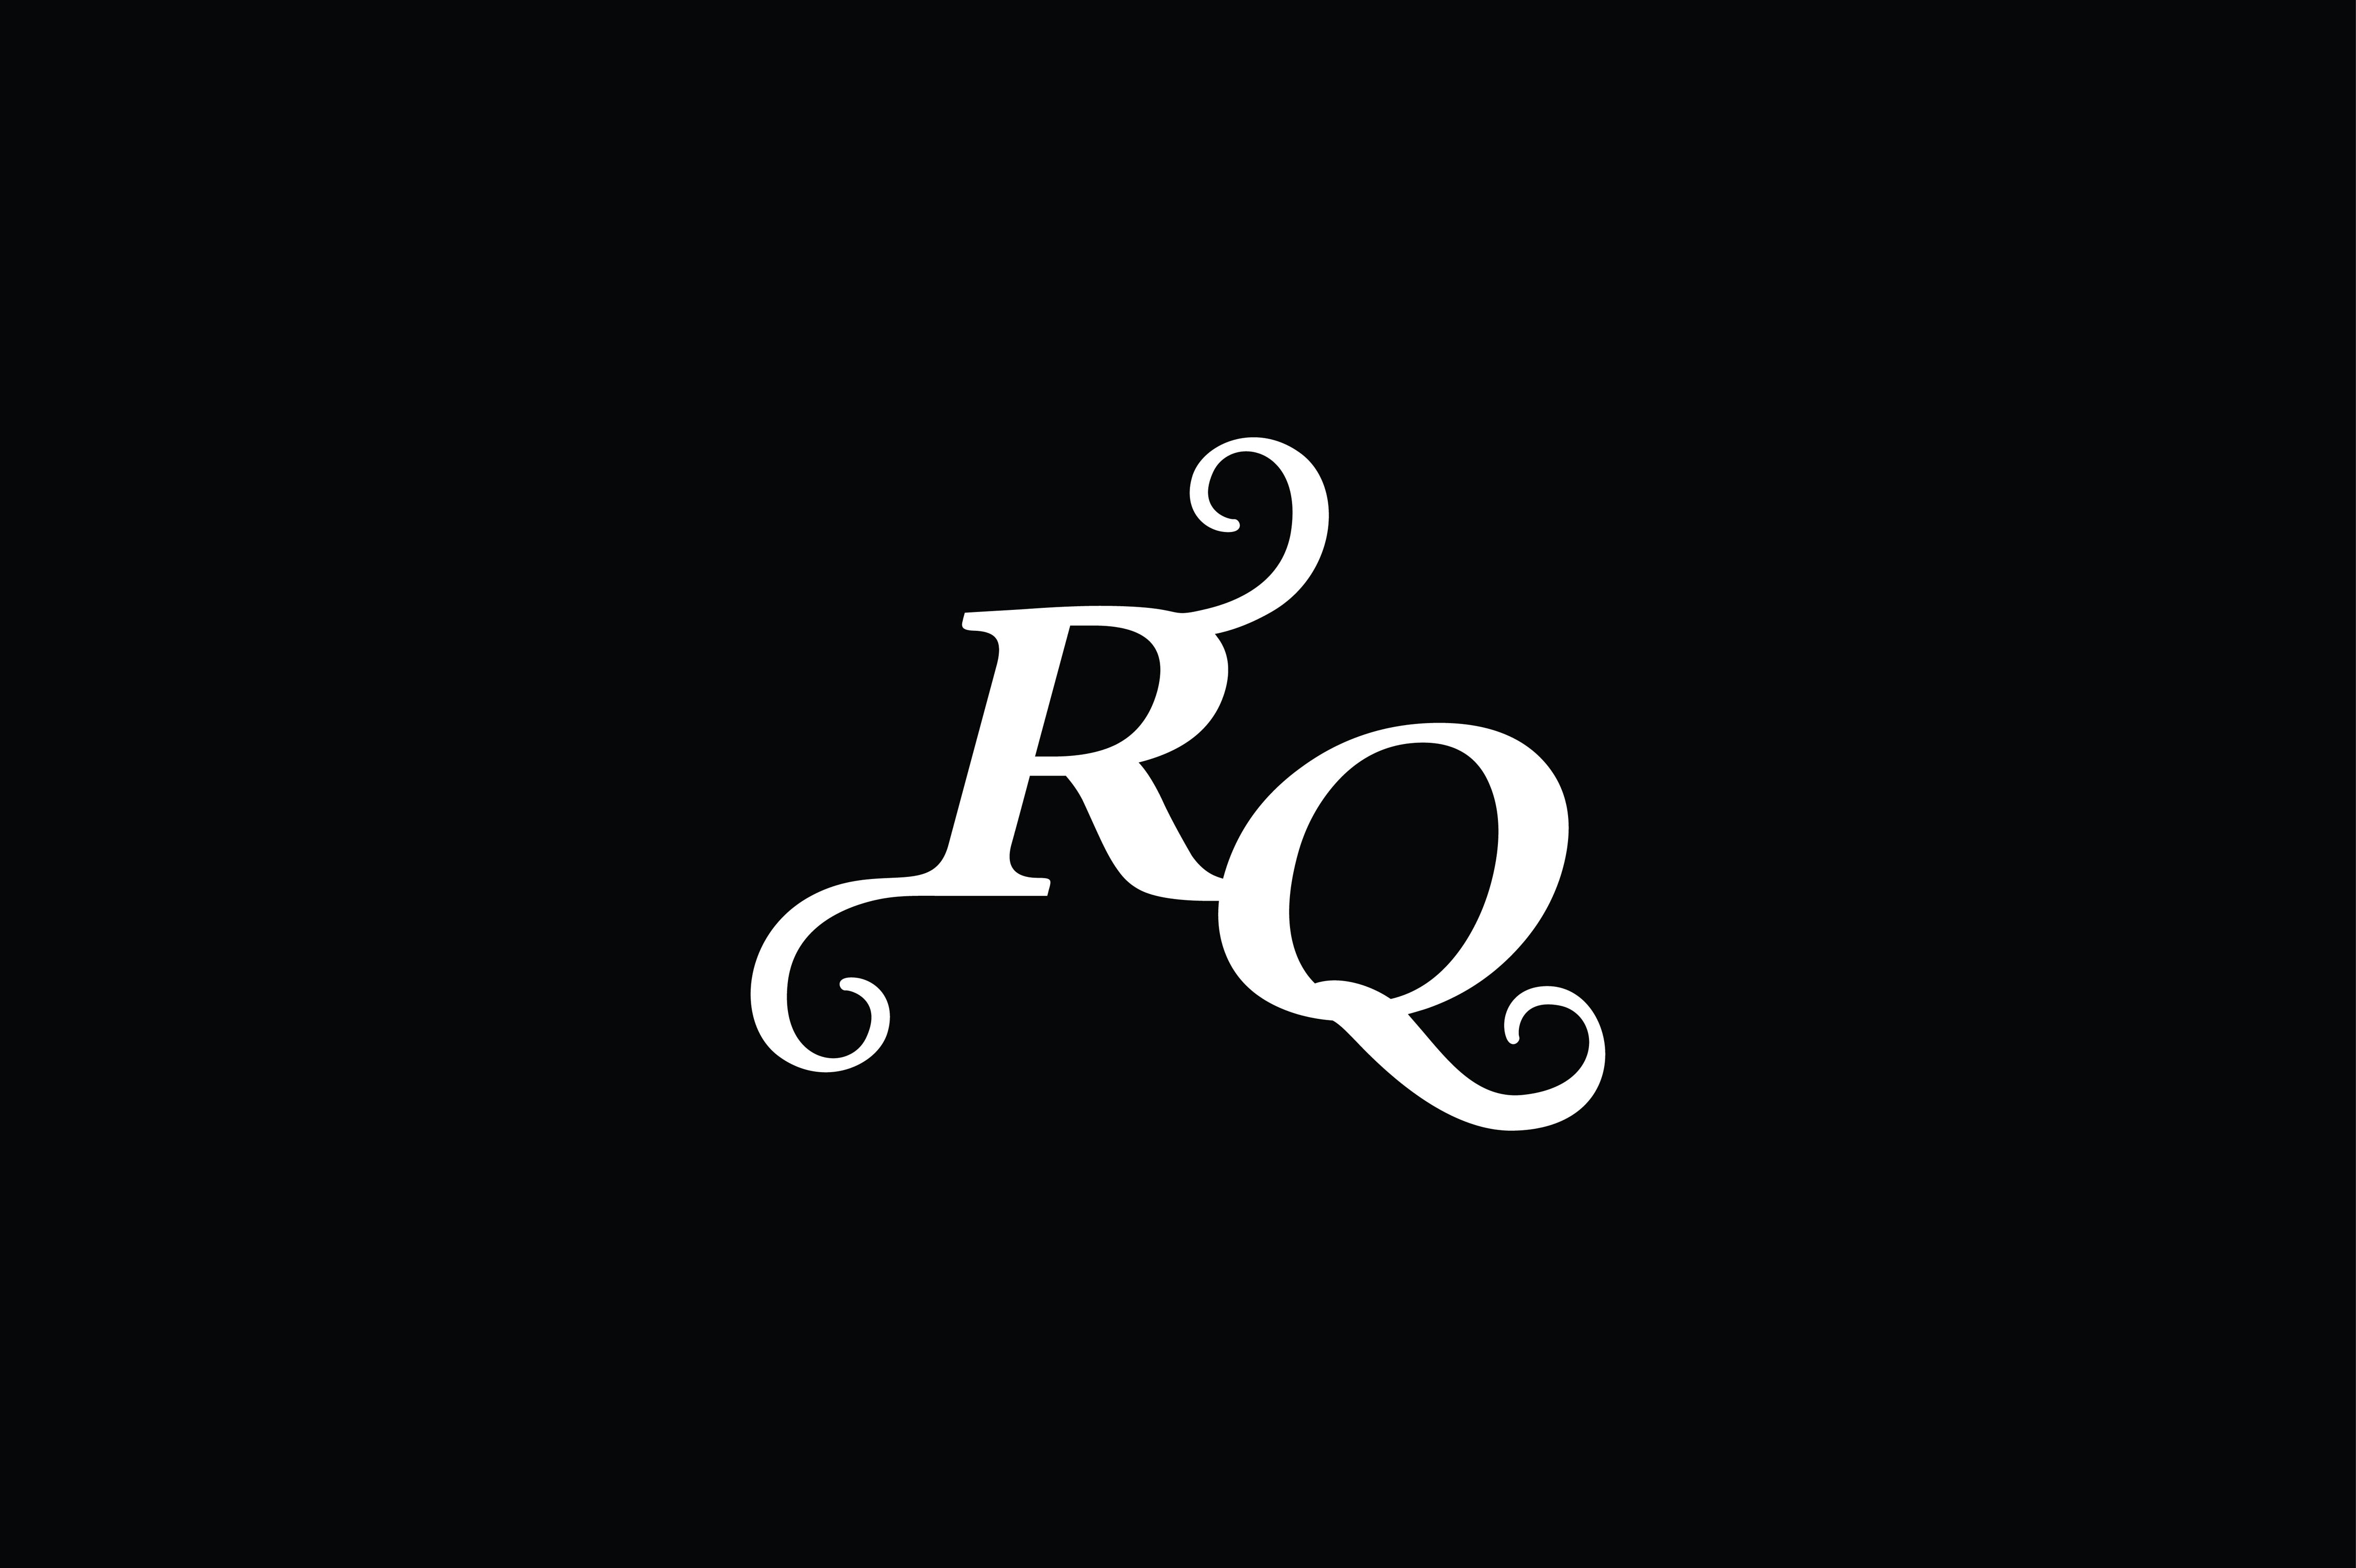 Monogram RQ Logo V2 Graphic by Greenlines Studios · Creative Fabrica